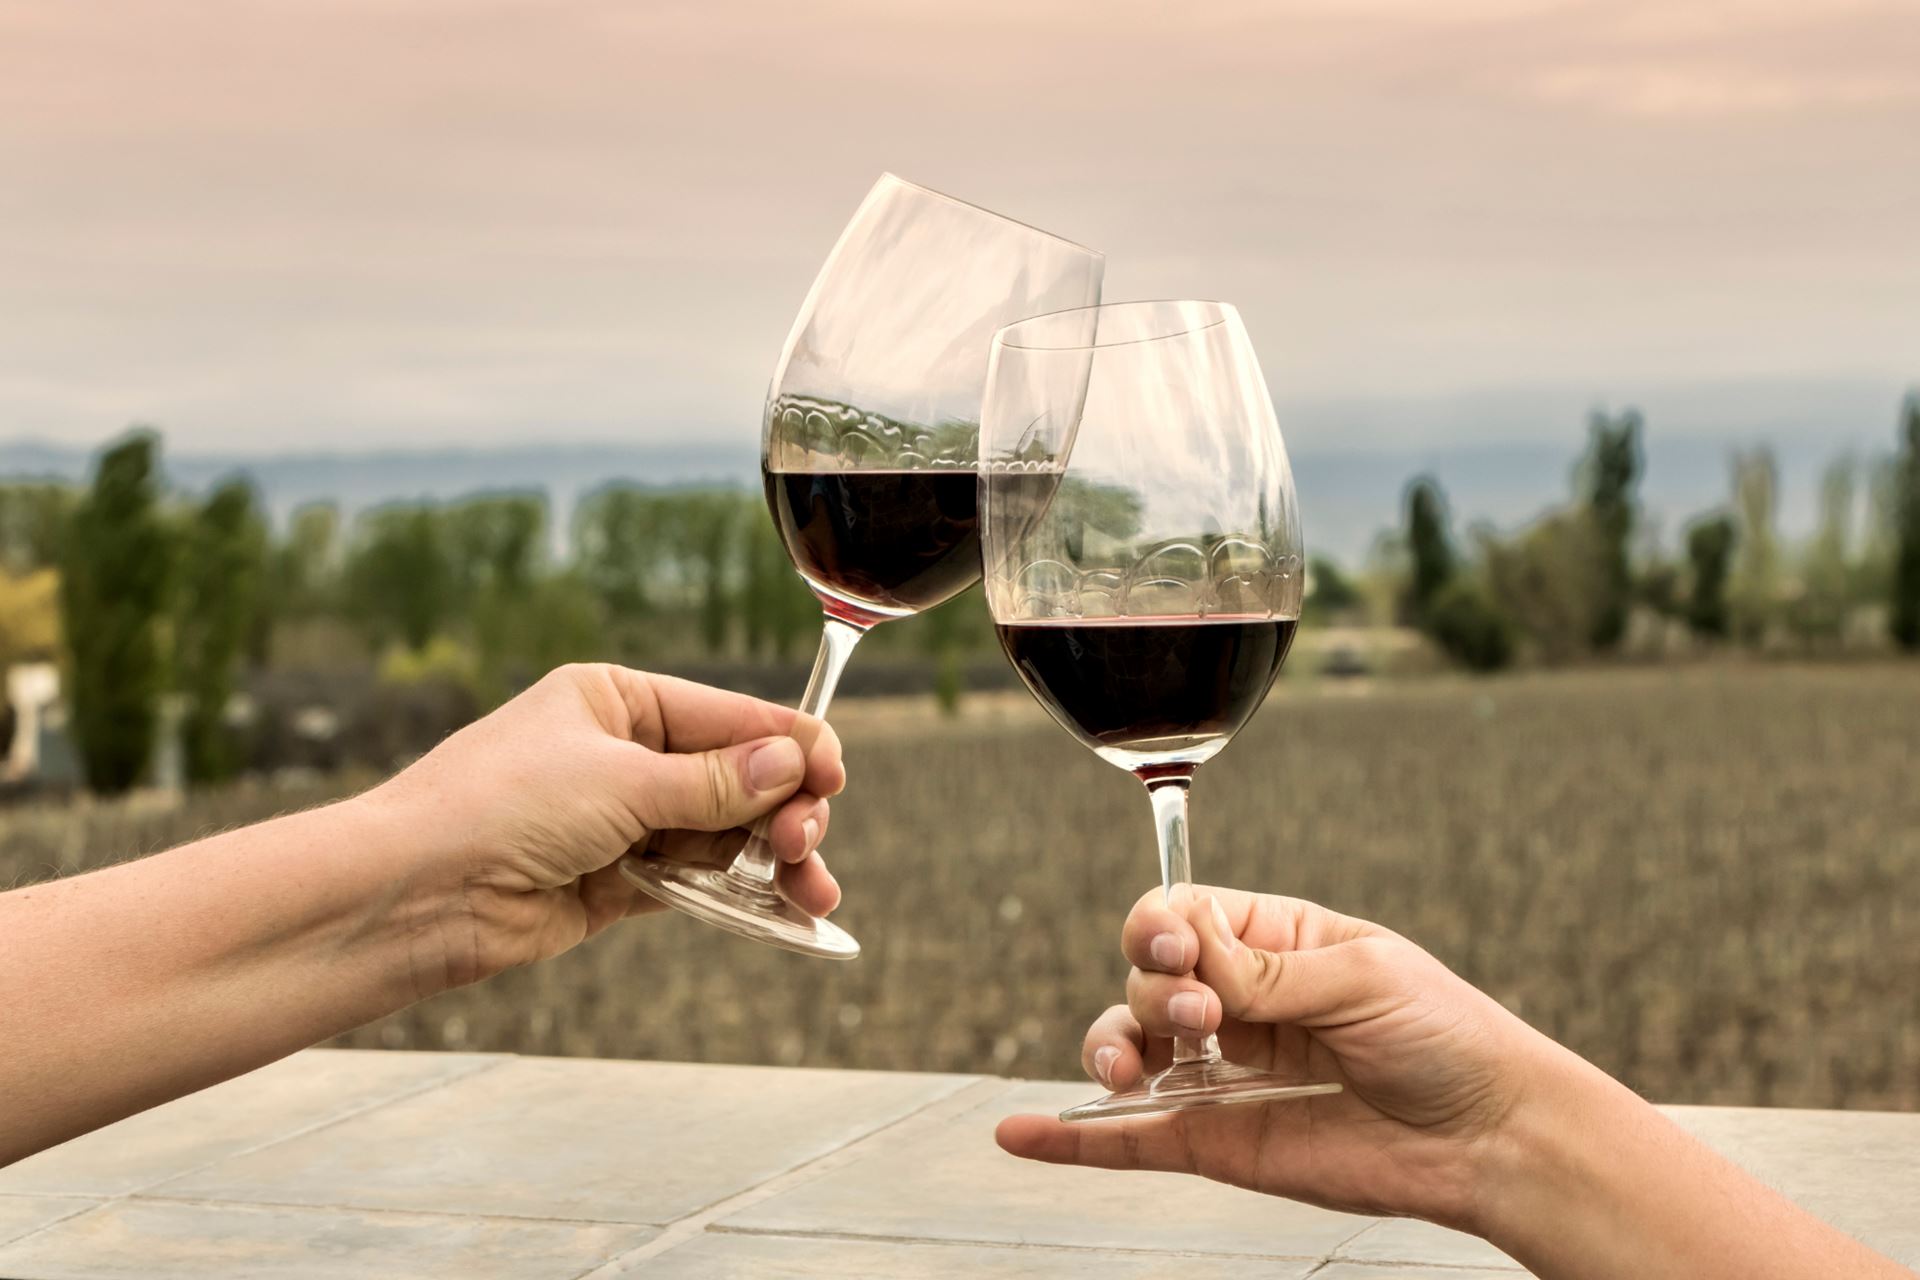 Winery Booking: reservar tu visita a la bodega en tres clicks